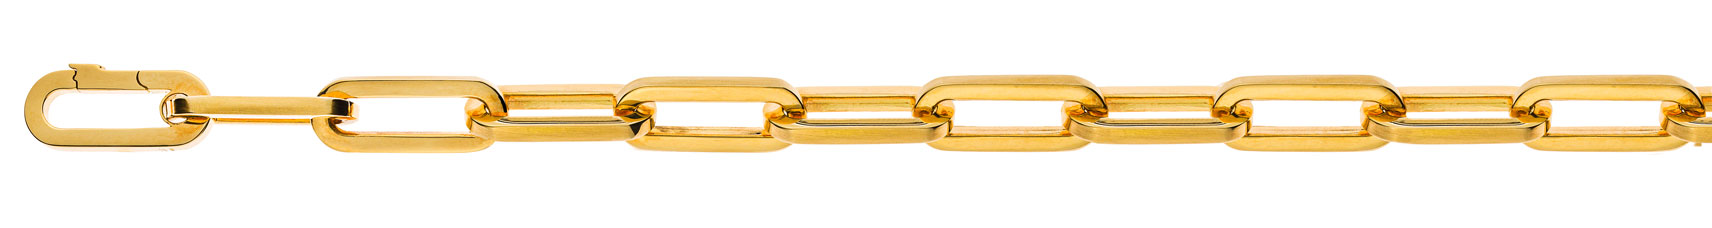 AURONOS Prestige Bracelet Oval Anchor 18K Yellow Gold 21.5cm Carné Wire